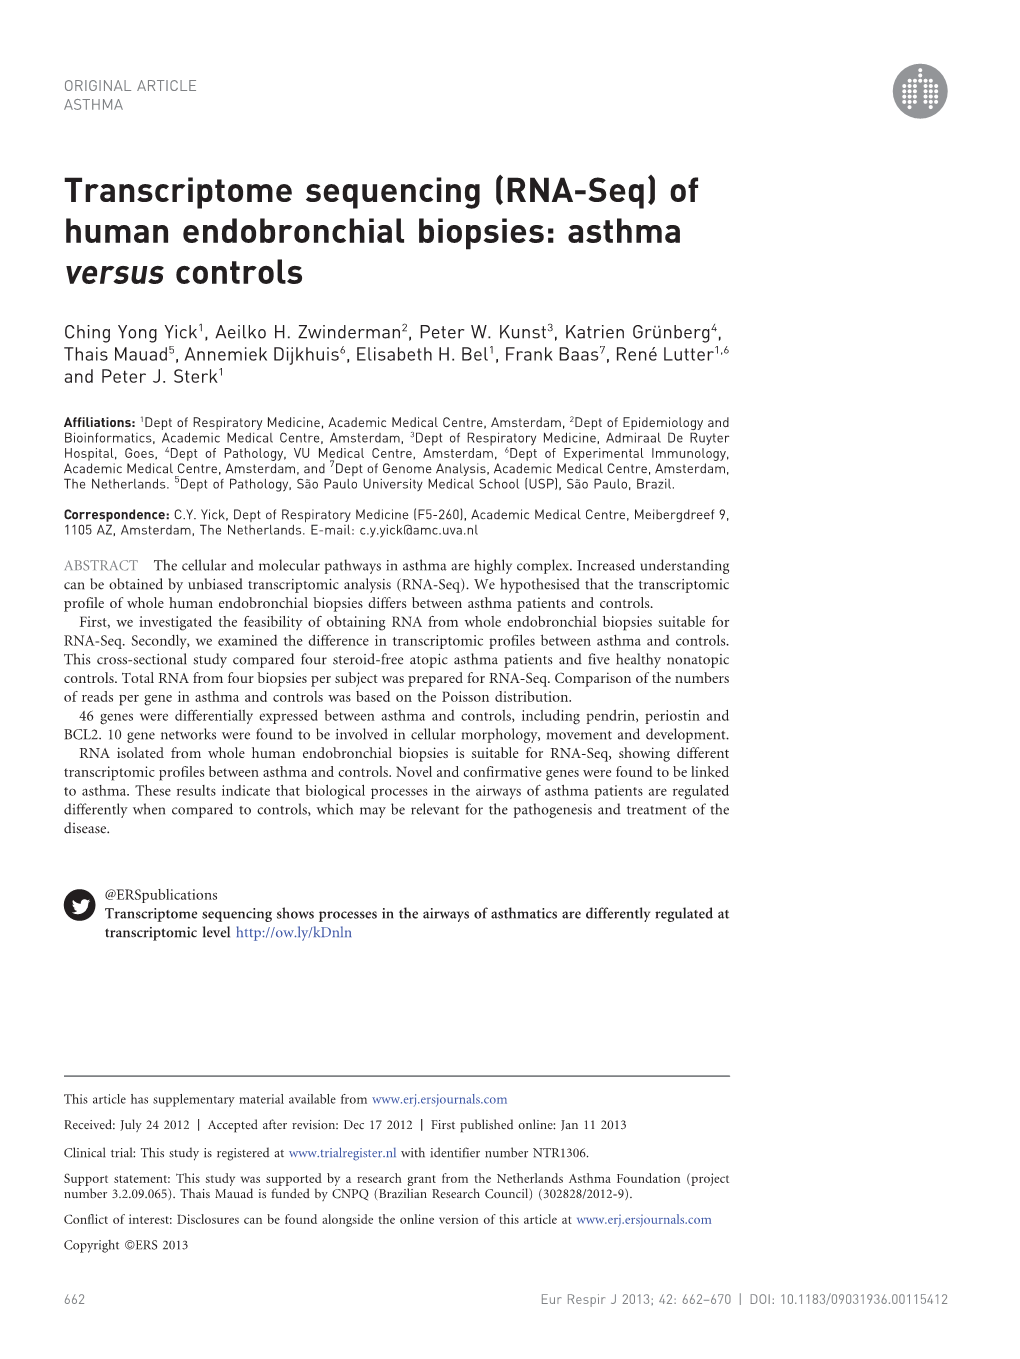 (RNA-Seq) of Human Endobronchial Biopsies: Asthma Versus Controls